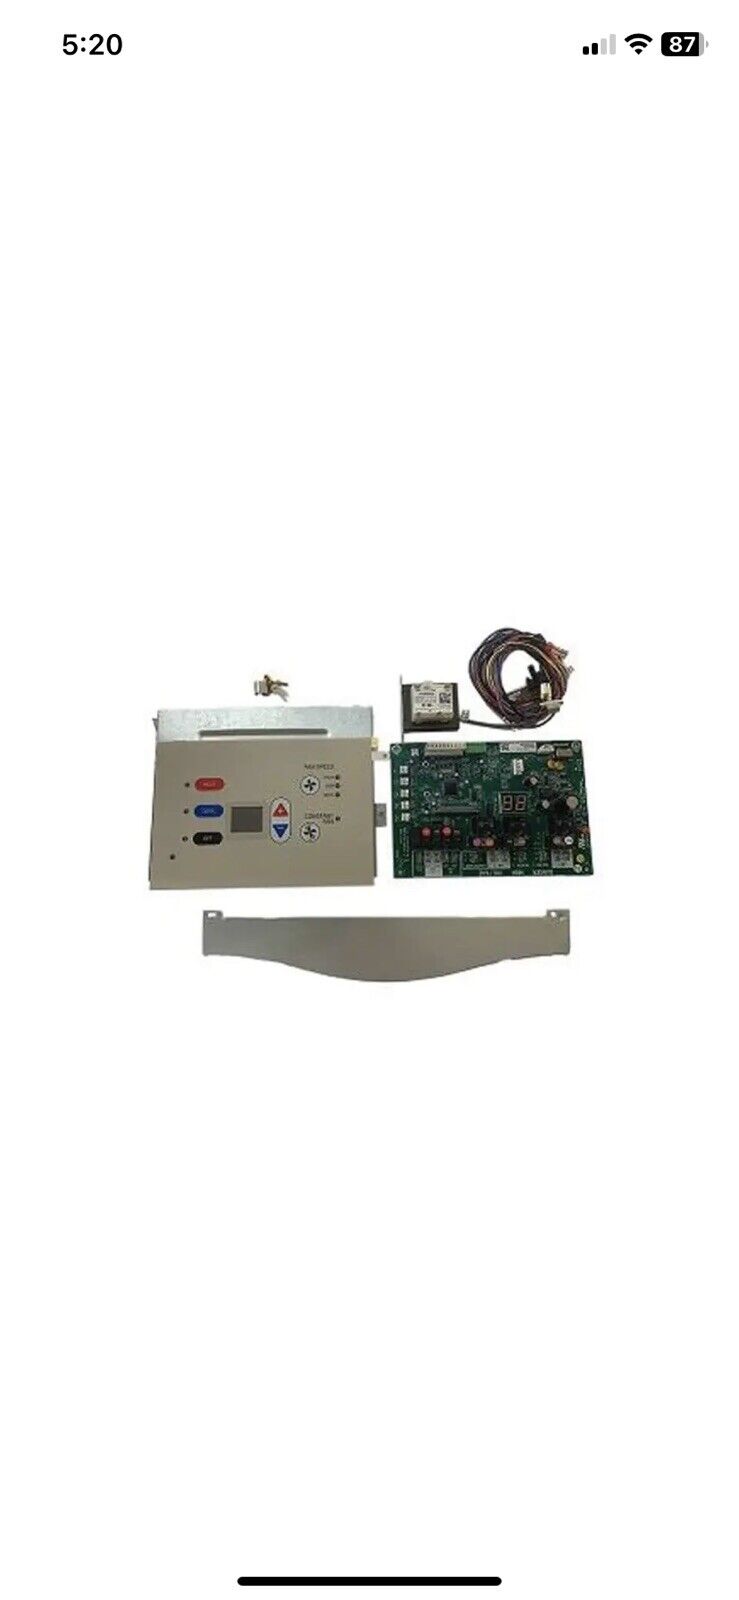 Goodman Rskp0014 Ptac Digital Control Board Kit With Transformer (Formally Rskp0